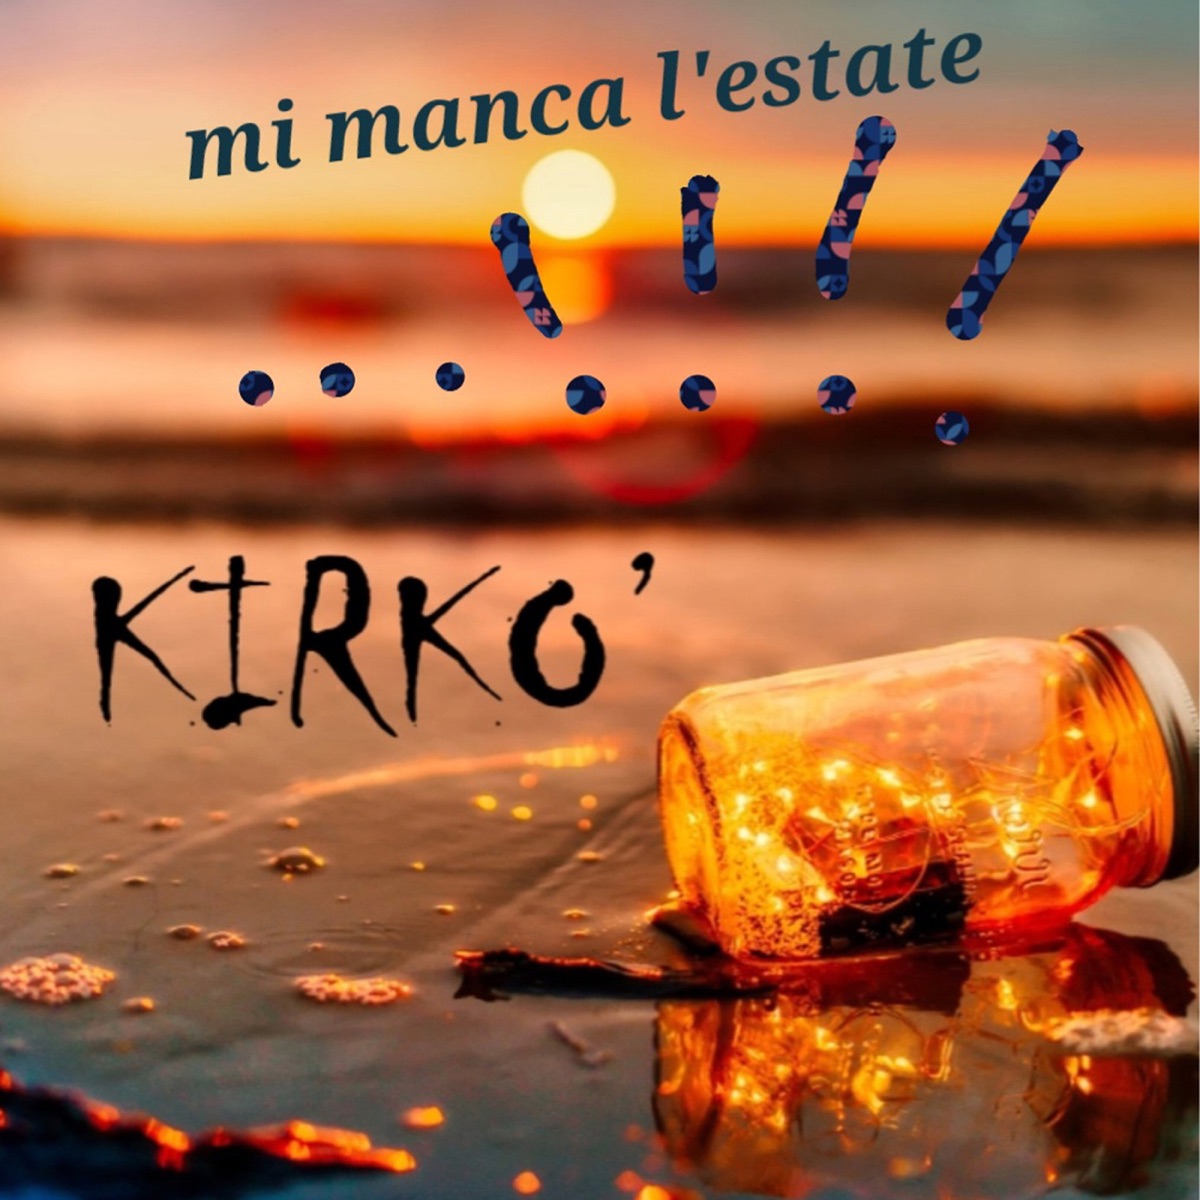 Mi manca l'estate - Single - Album by Kirko - Apple Music